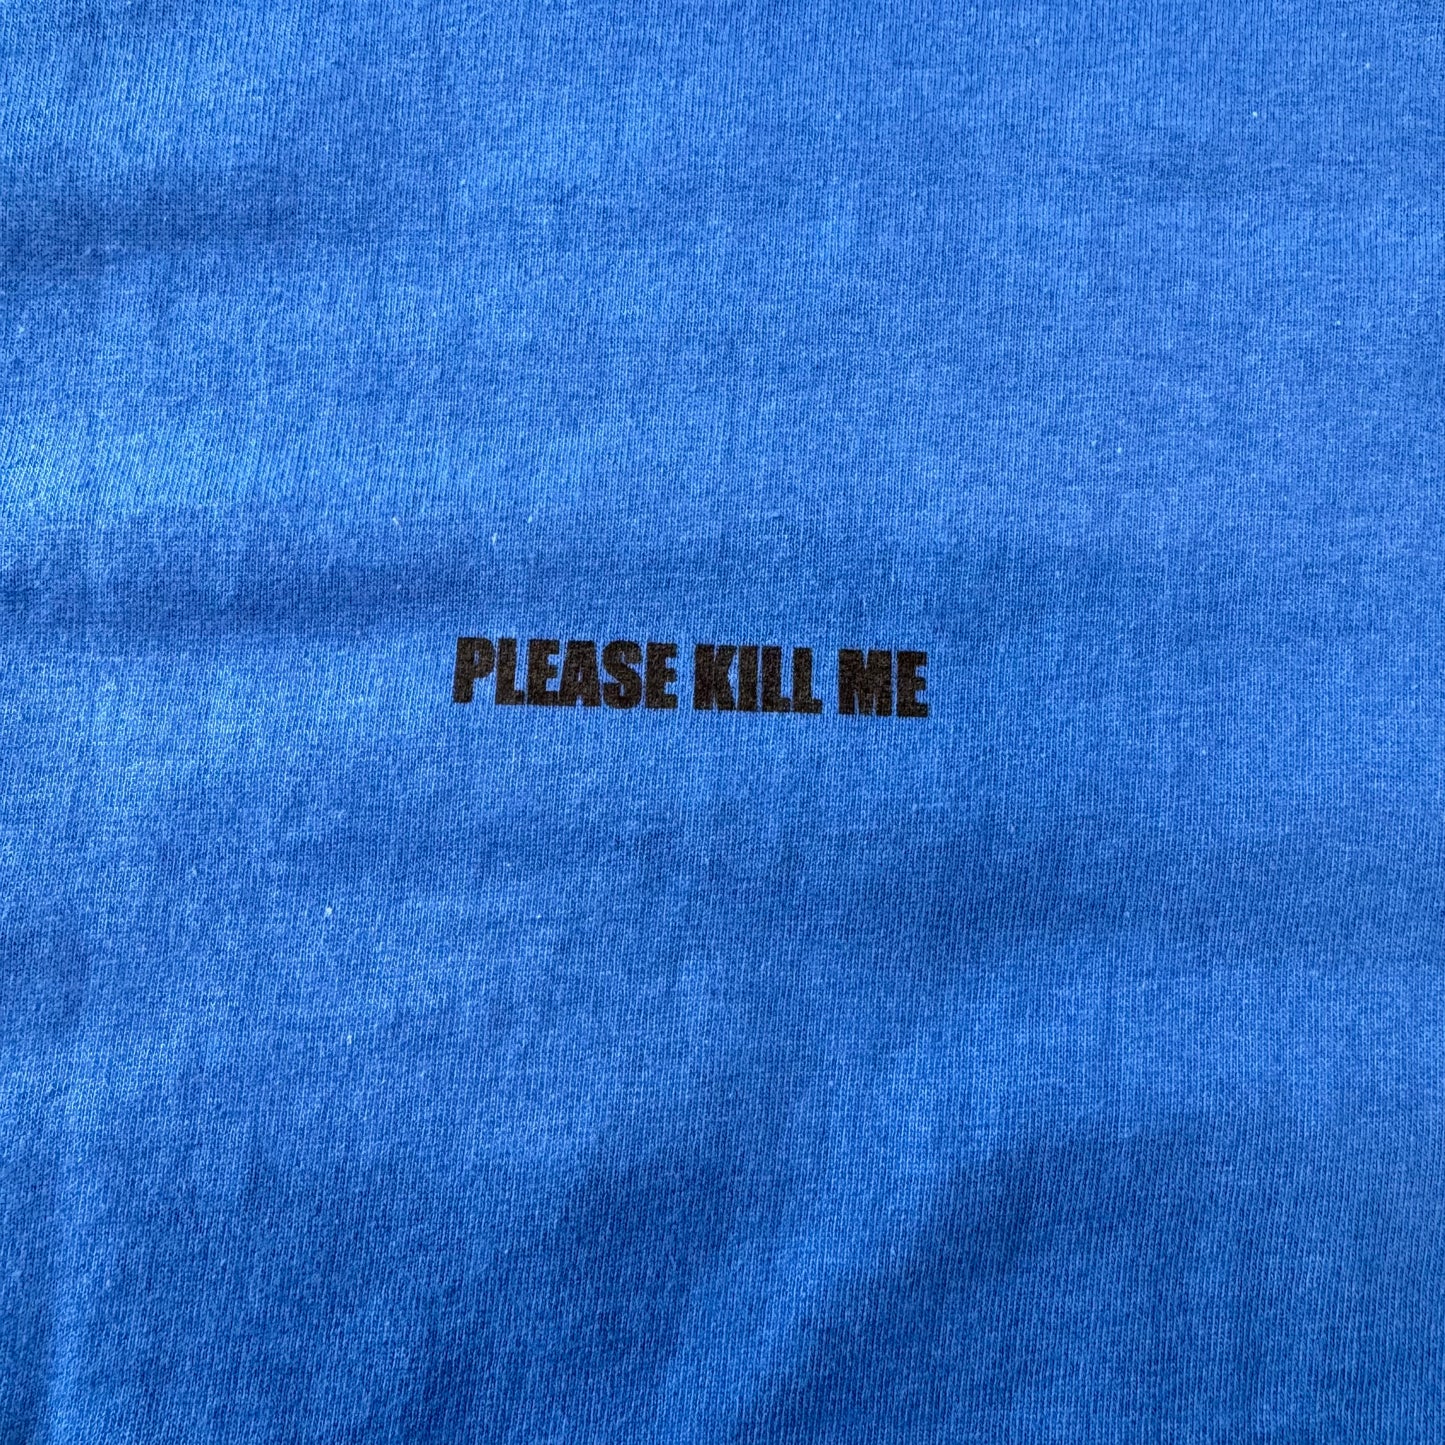 closeup of Please Kill Me logo